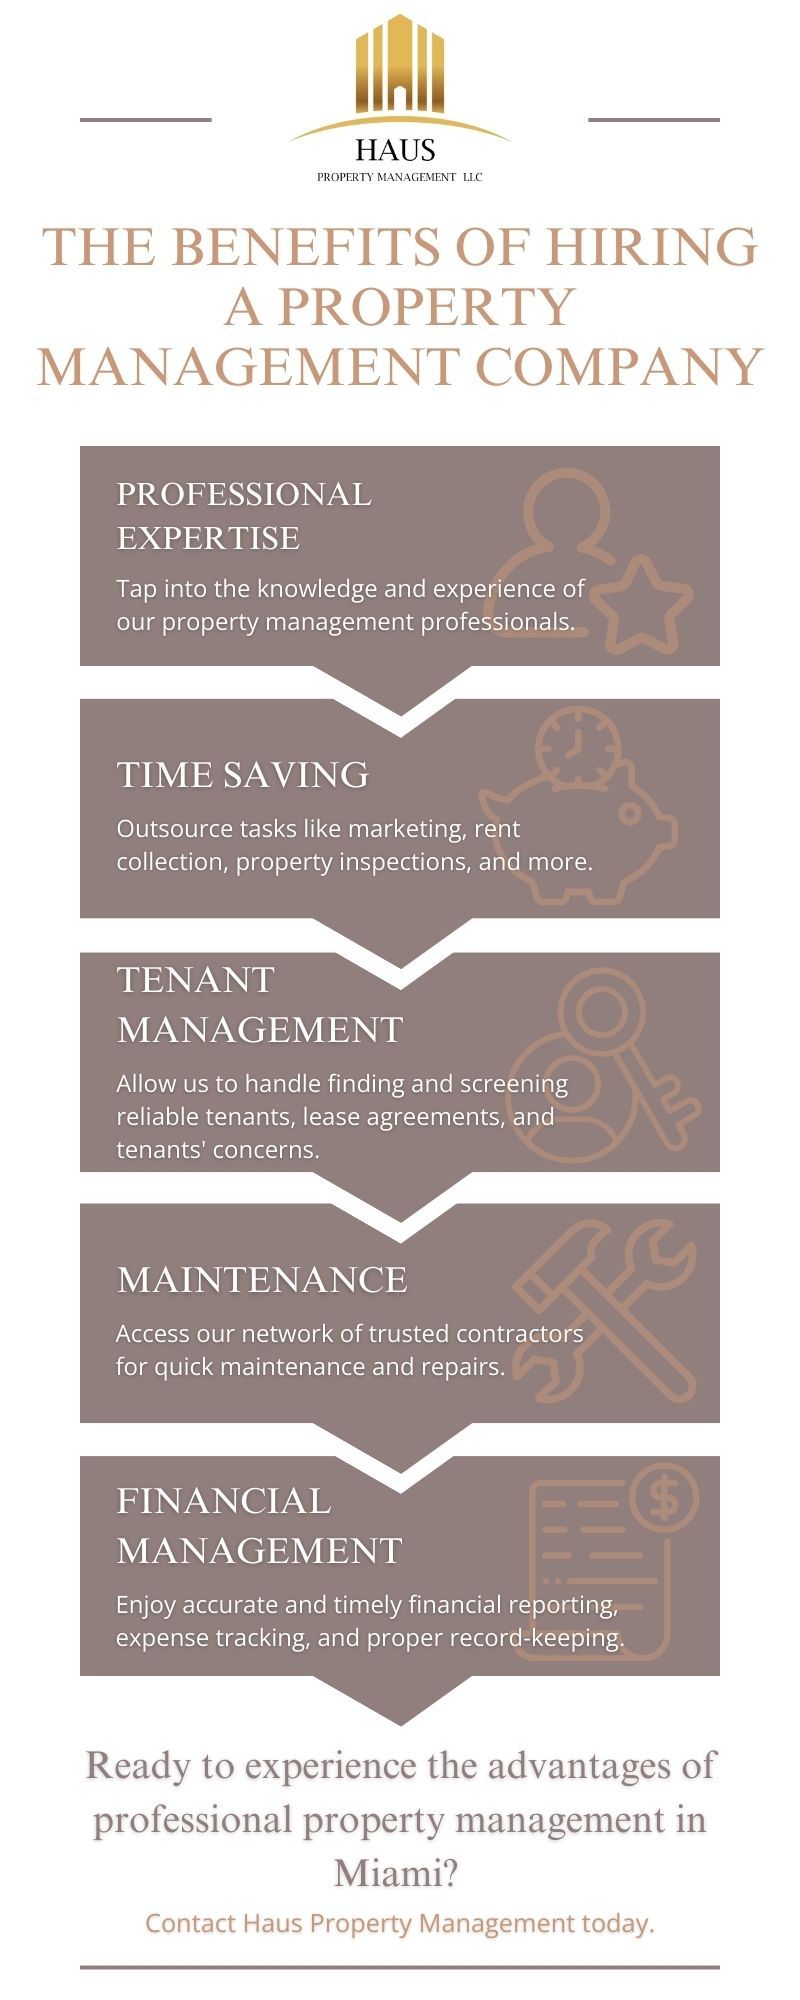 M39048 - Haus Property Management LLC - Benefits of Hiring a Property Management Company  (3).jpg